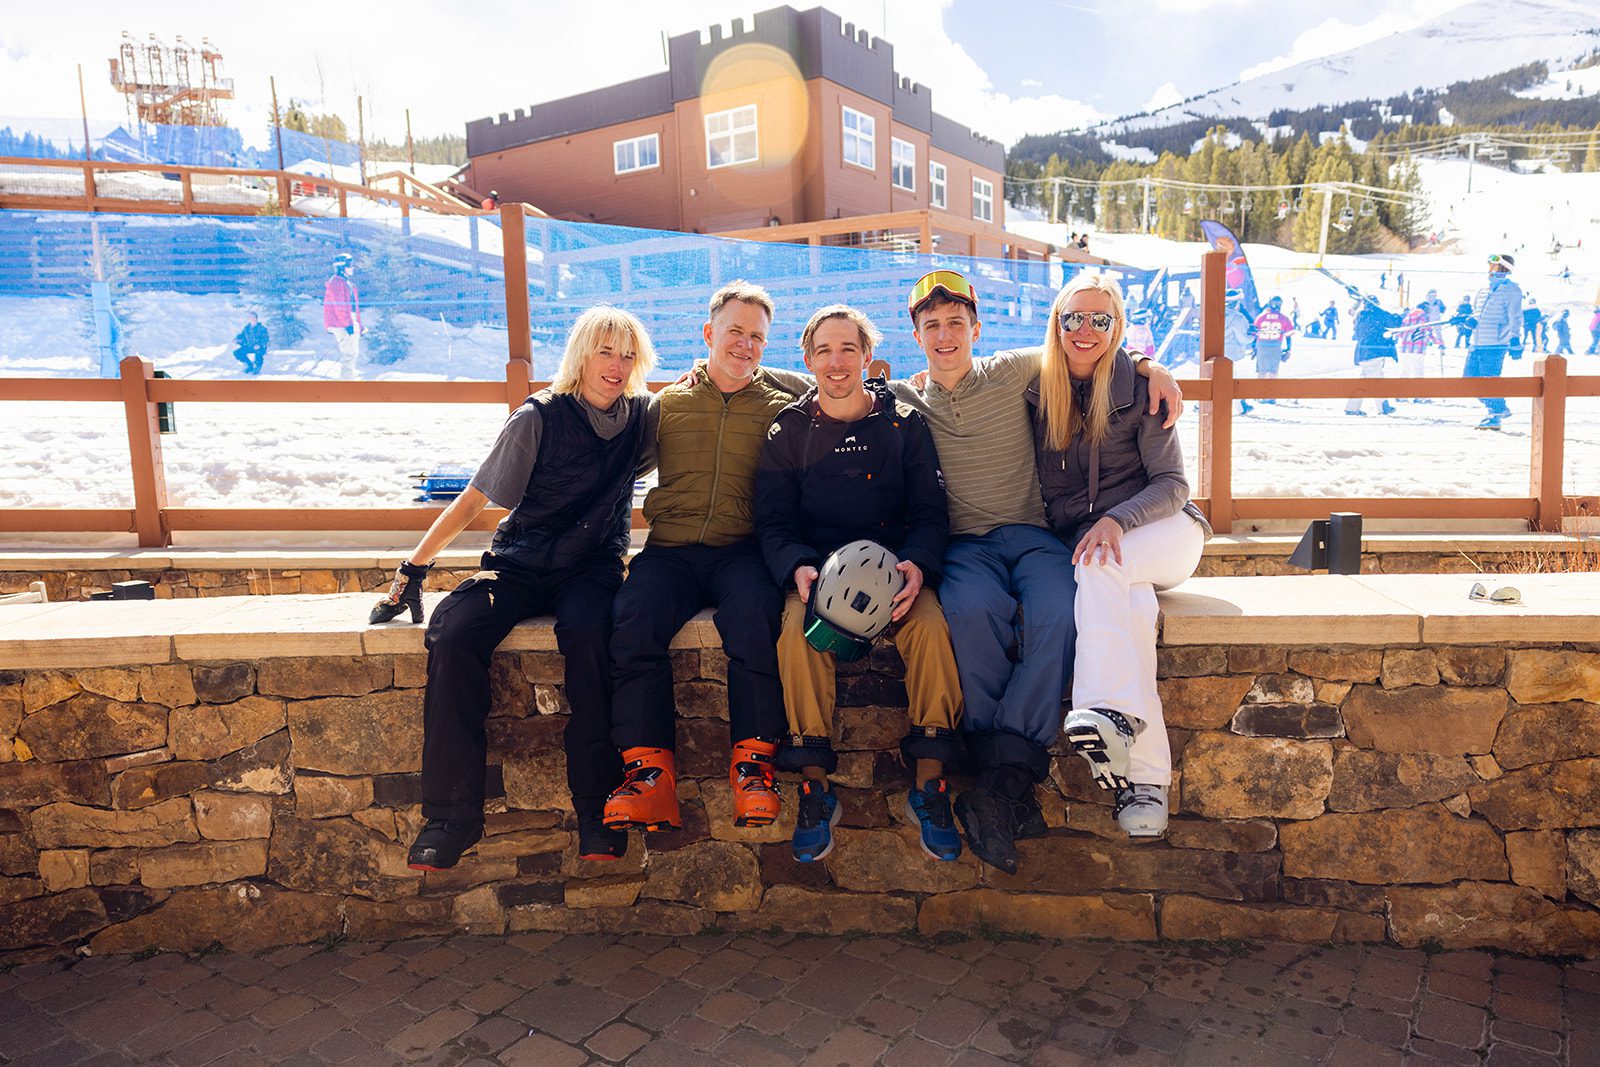 Group family photo at Breckenridge ski resort after parents vow renewal.